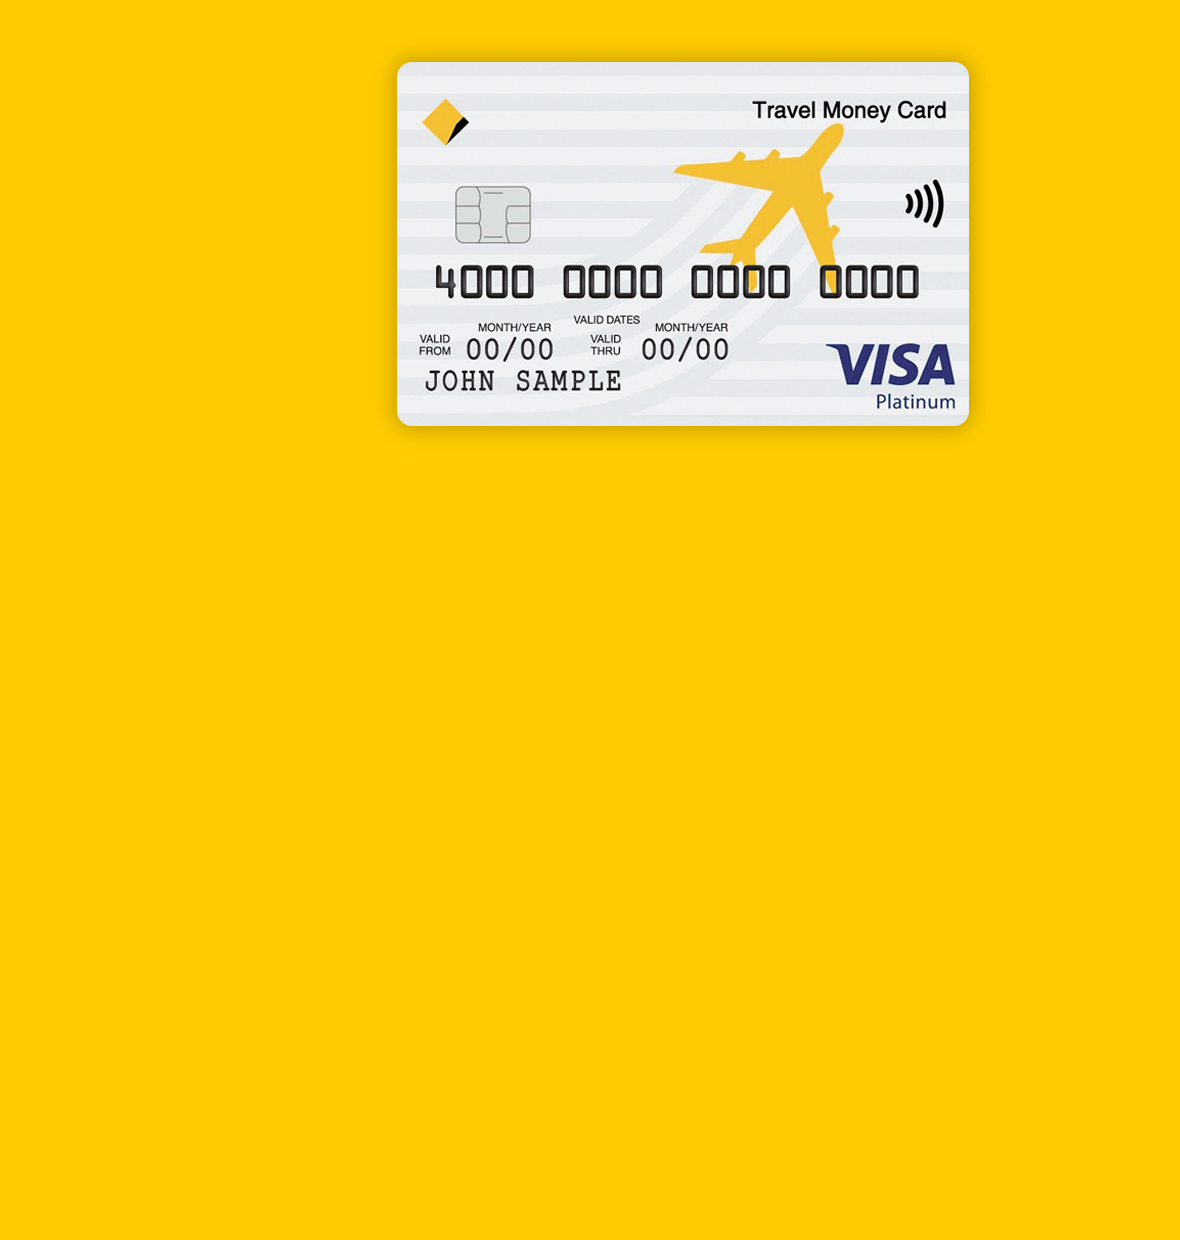 Travel Money Card – CommBank